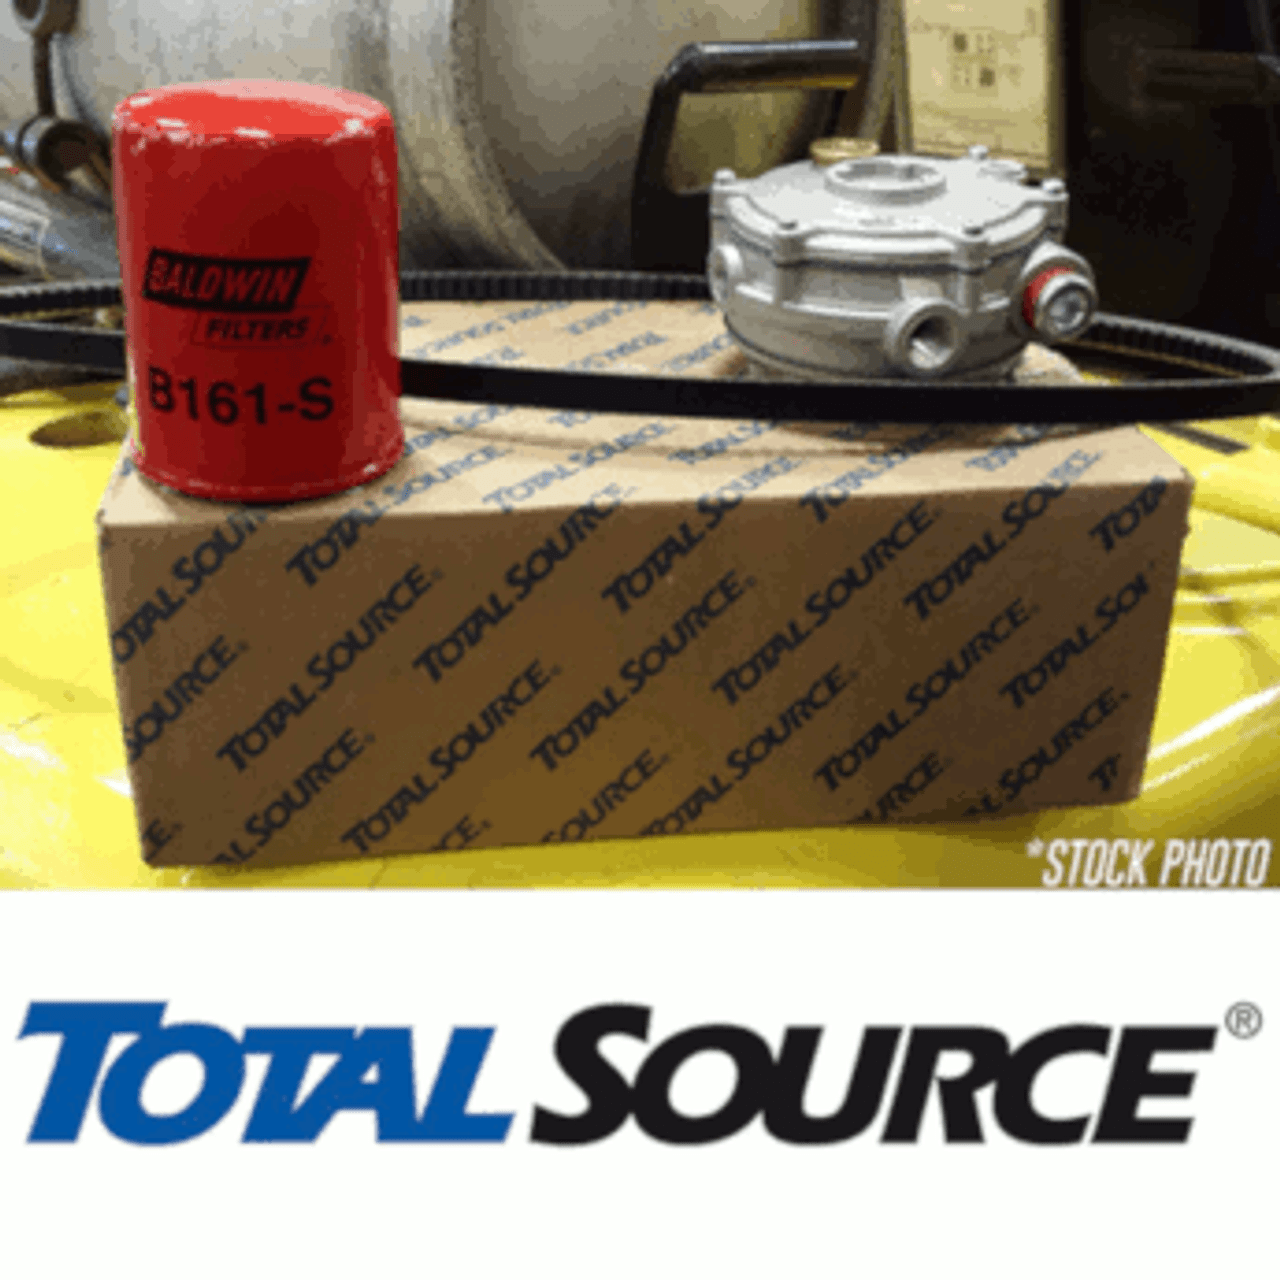 9440401018: Caterpillar/Towmotor Forklift TILT SOCKET